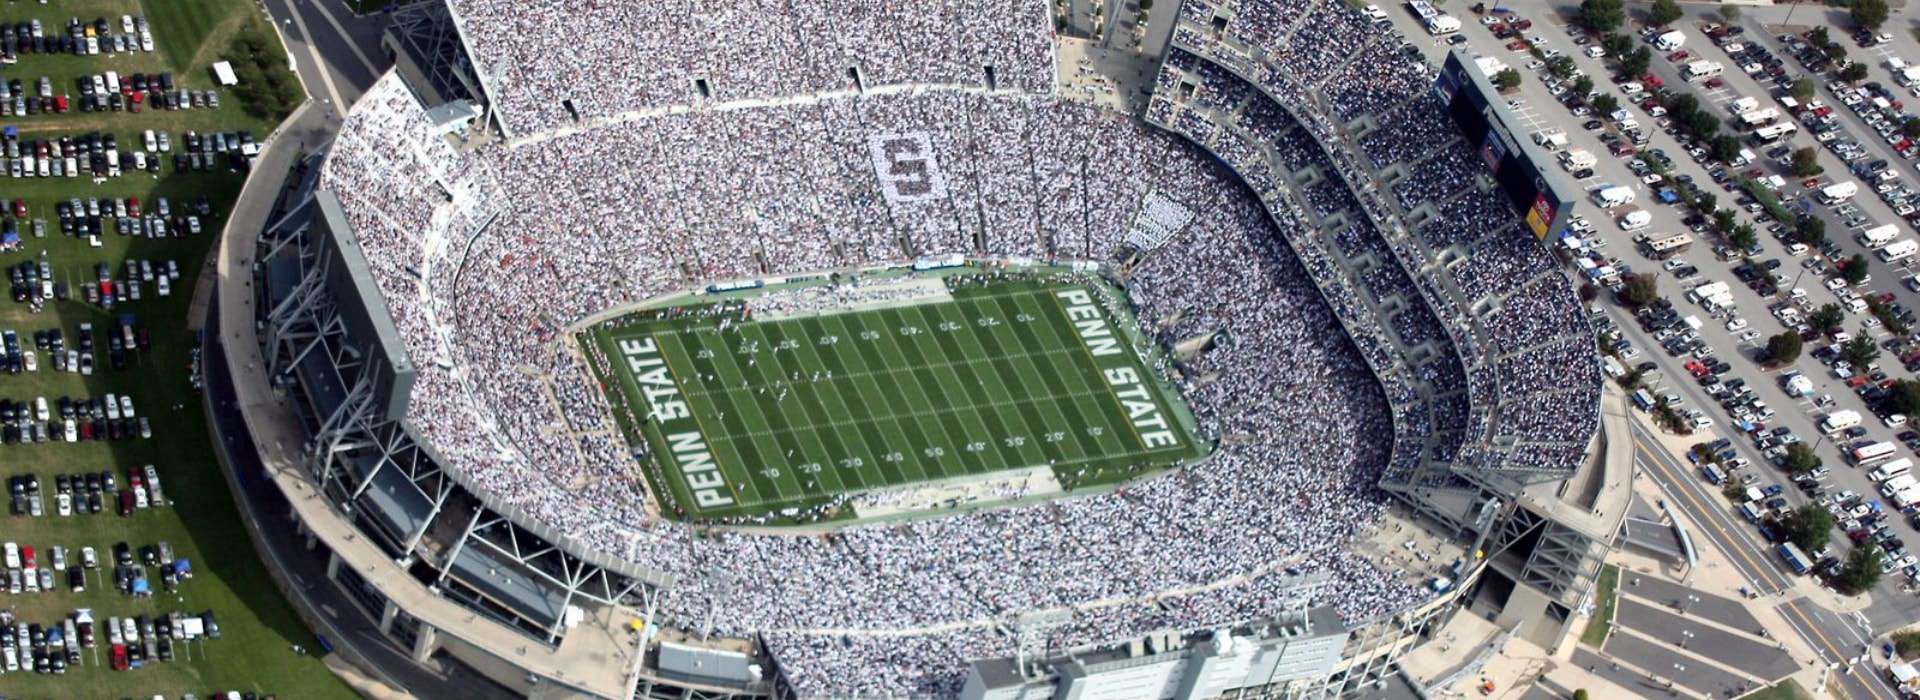 Aerial view of Penn State football stadium full of fans